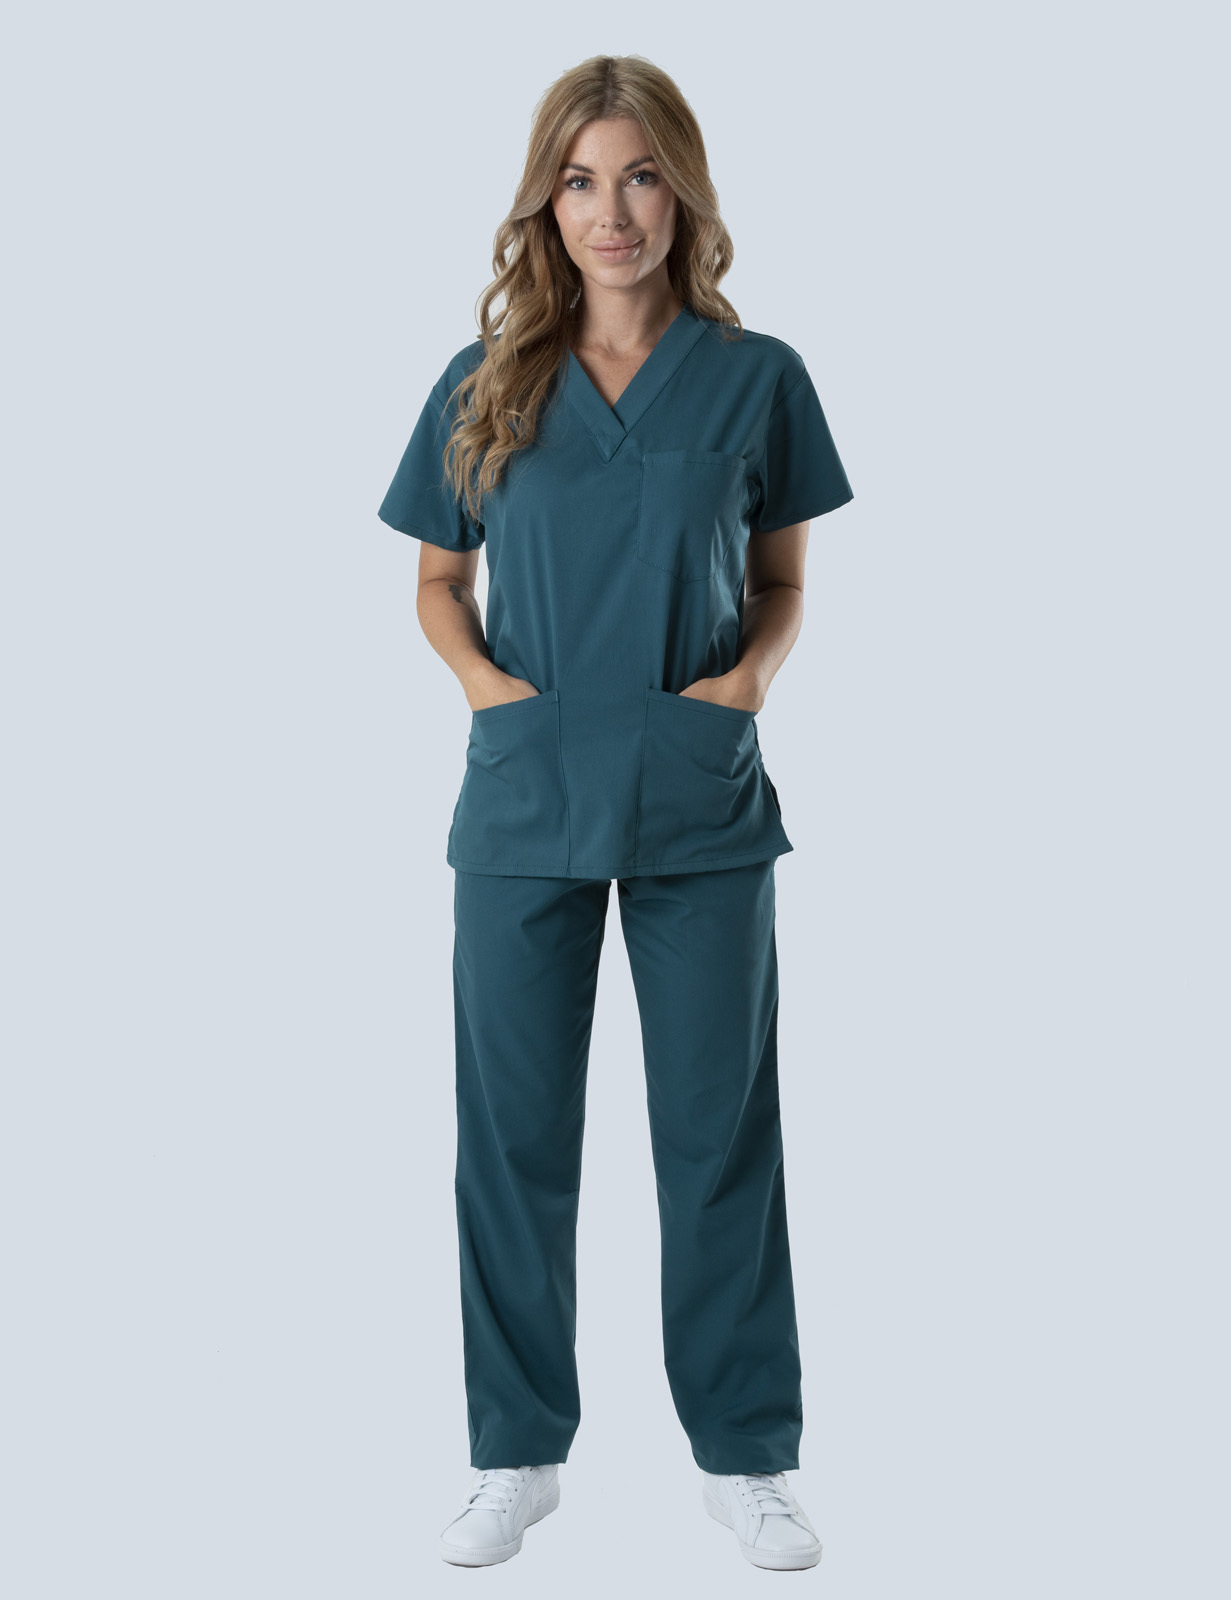 Rockhampton Hospital Enrolled Nurse Uniform Set Bundle((4 Pocket Top and Cargo Pants in Caribbean incl Logos)